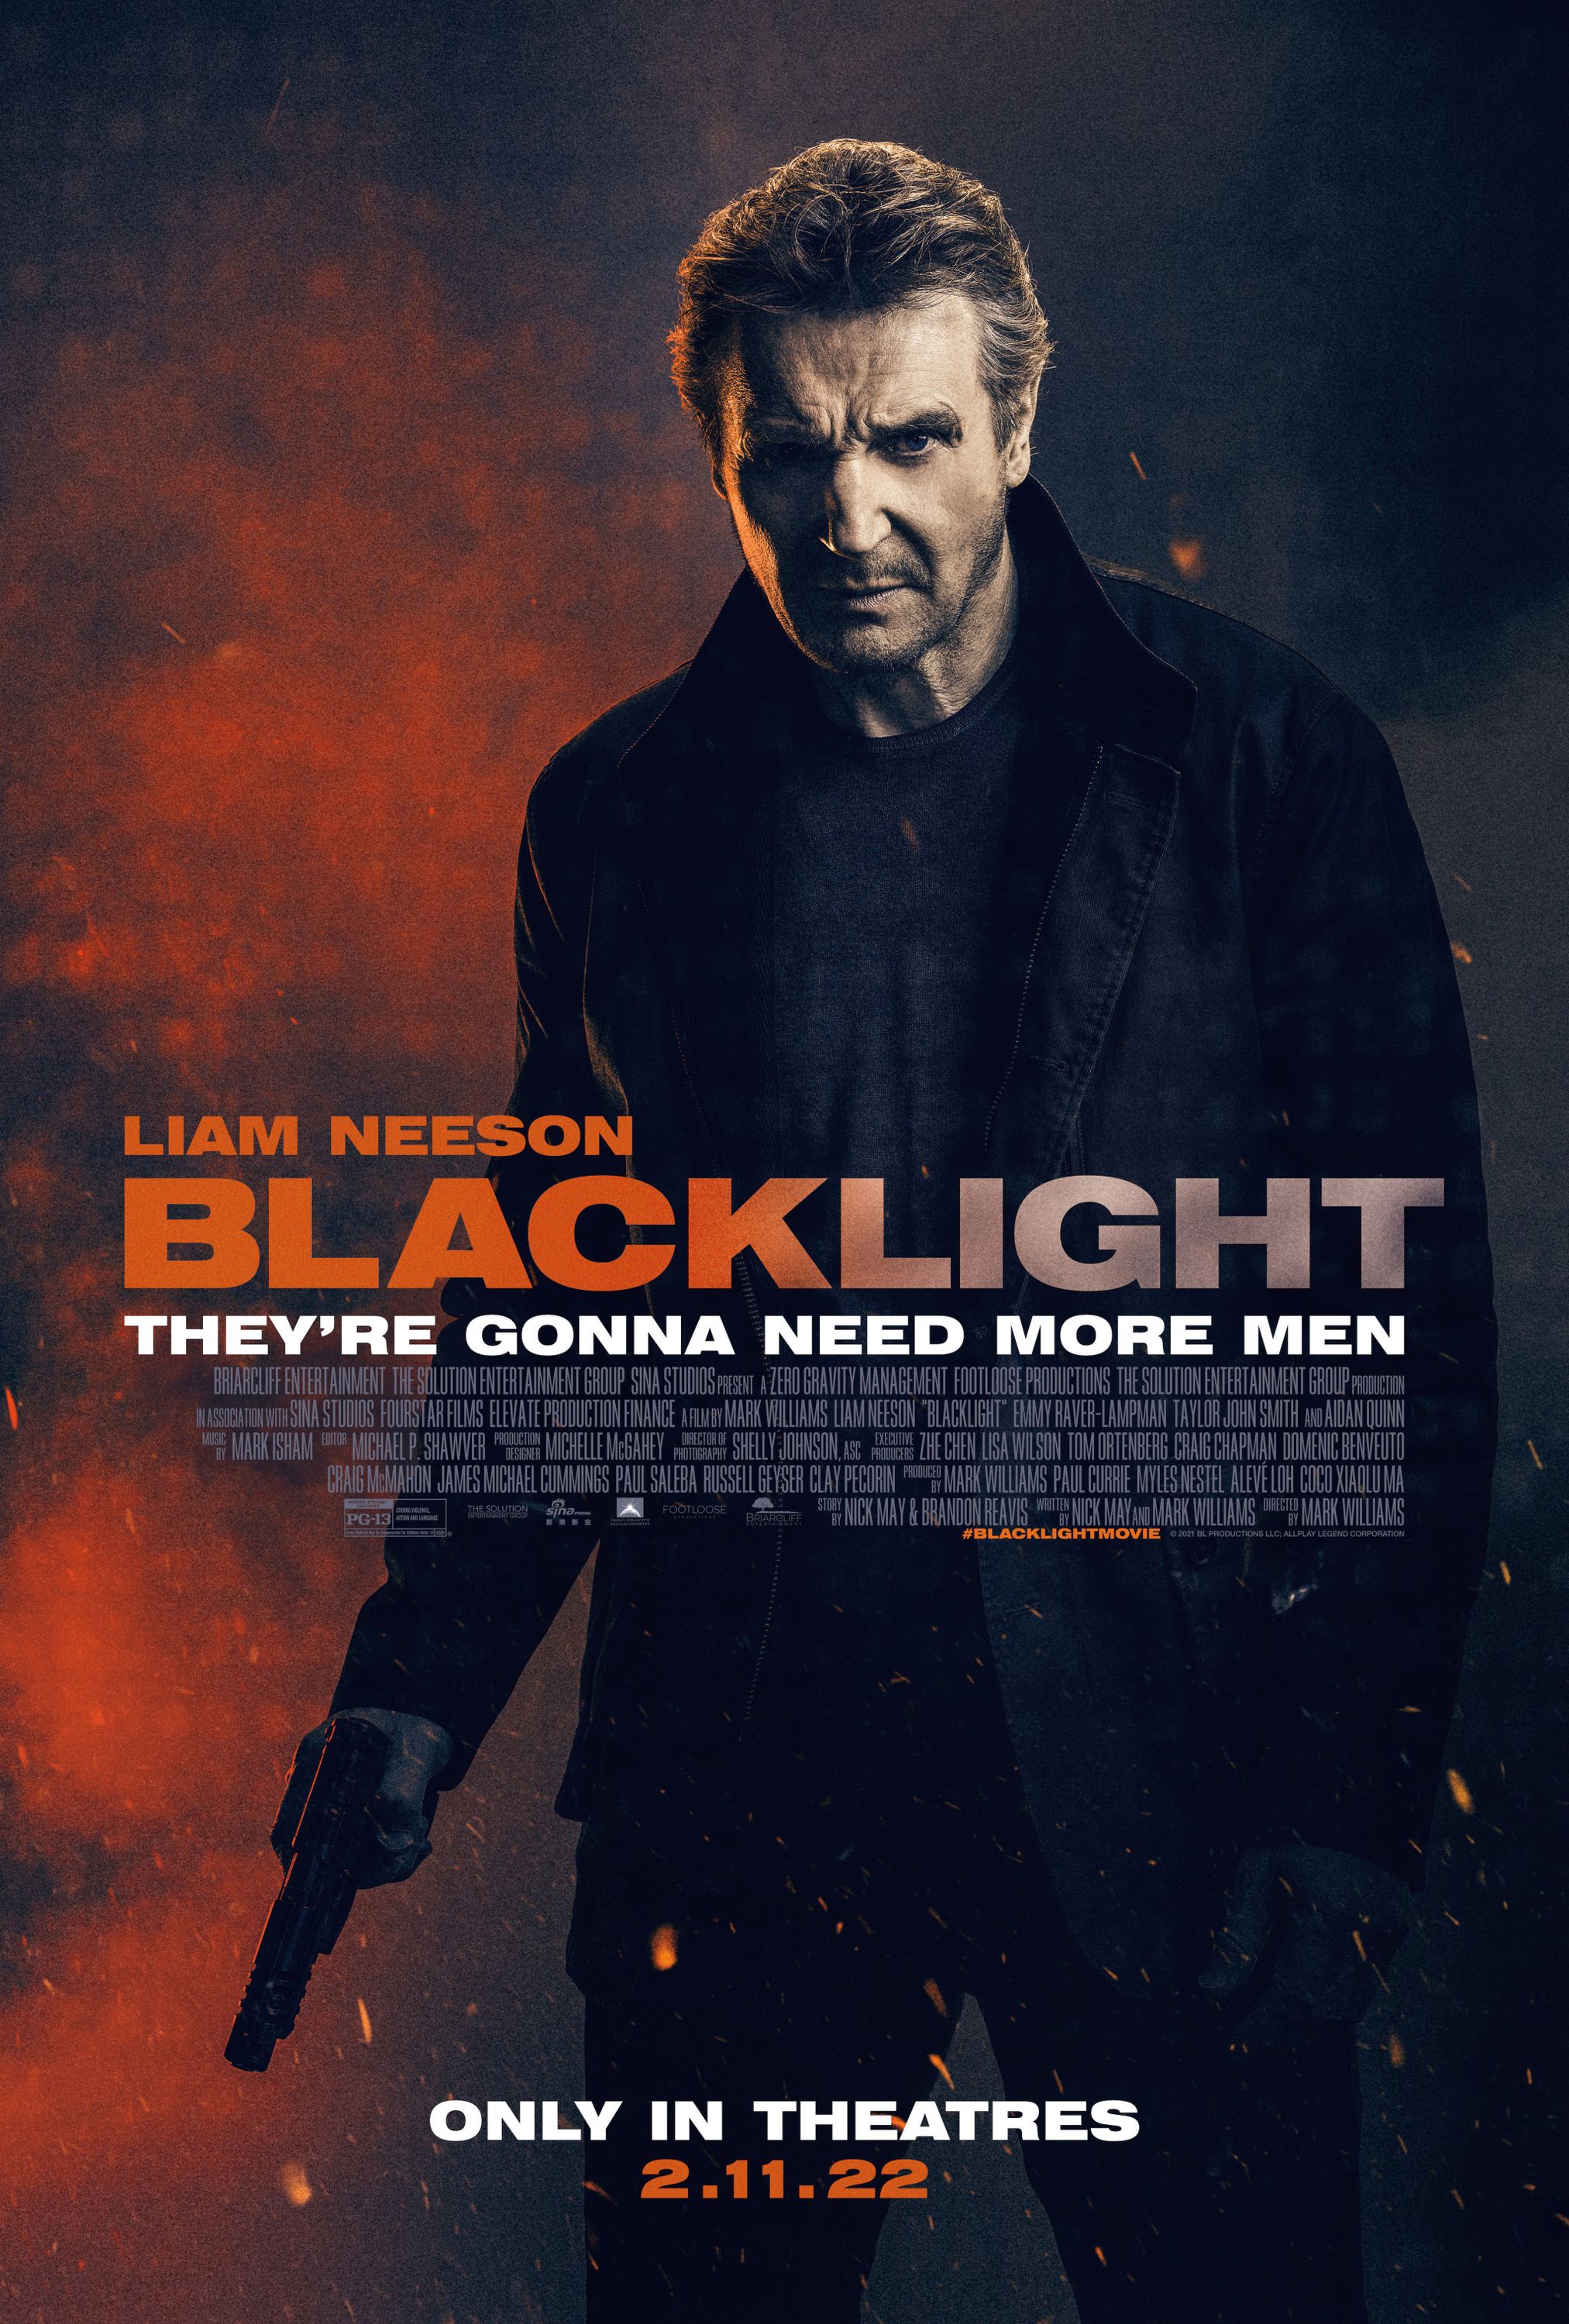 blacklight movie review